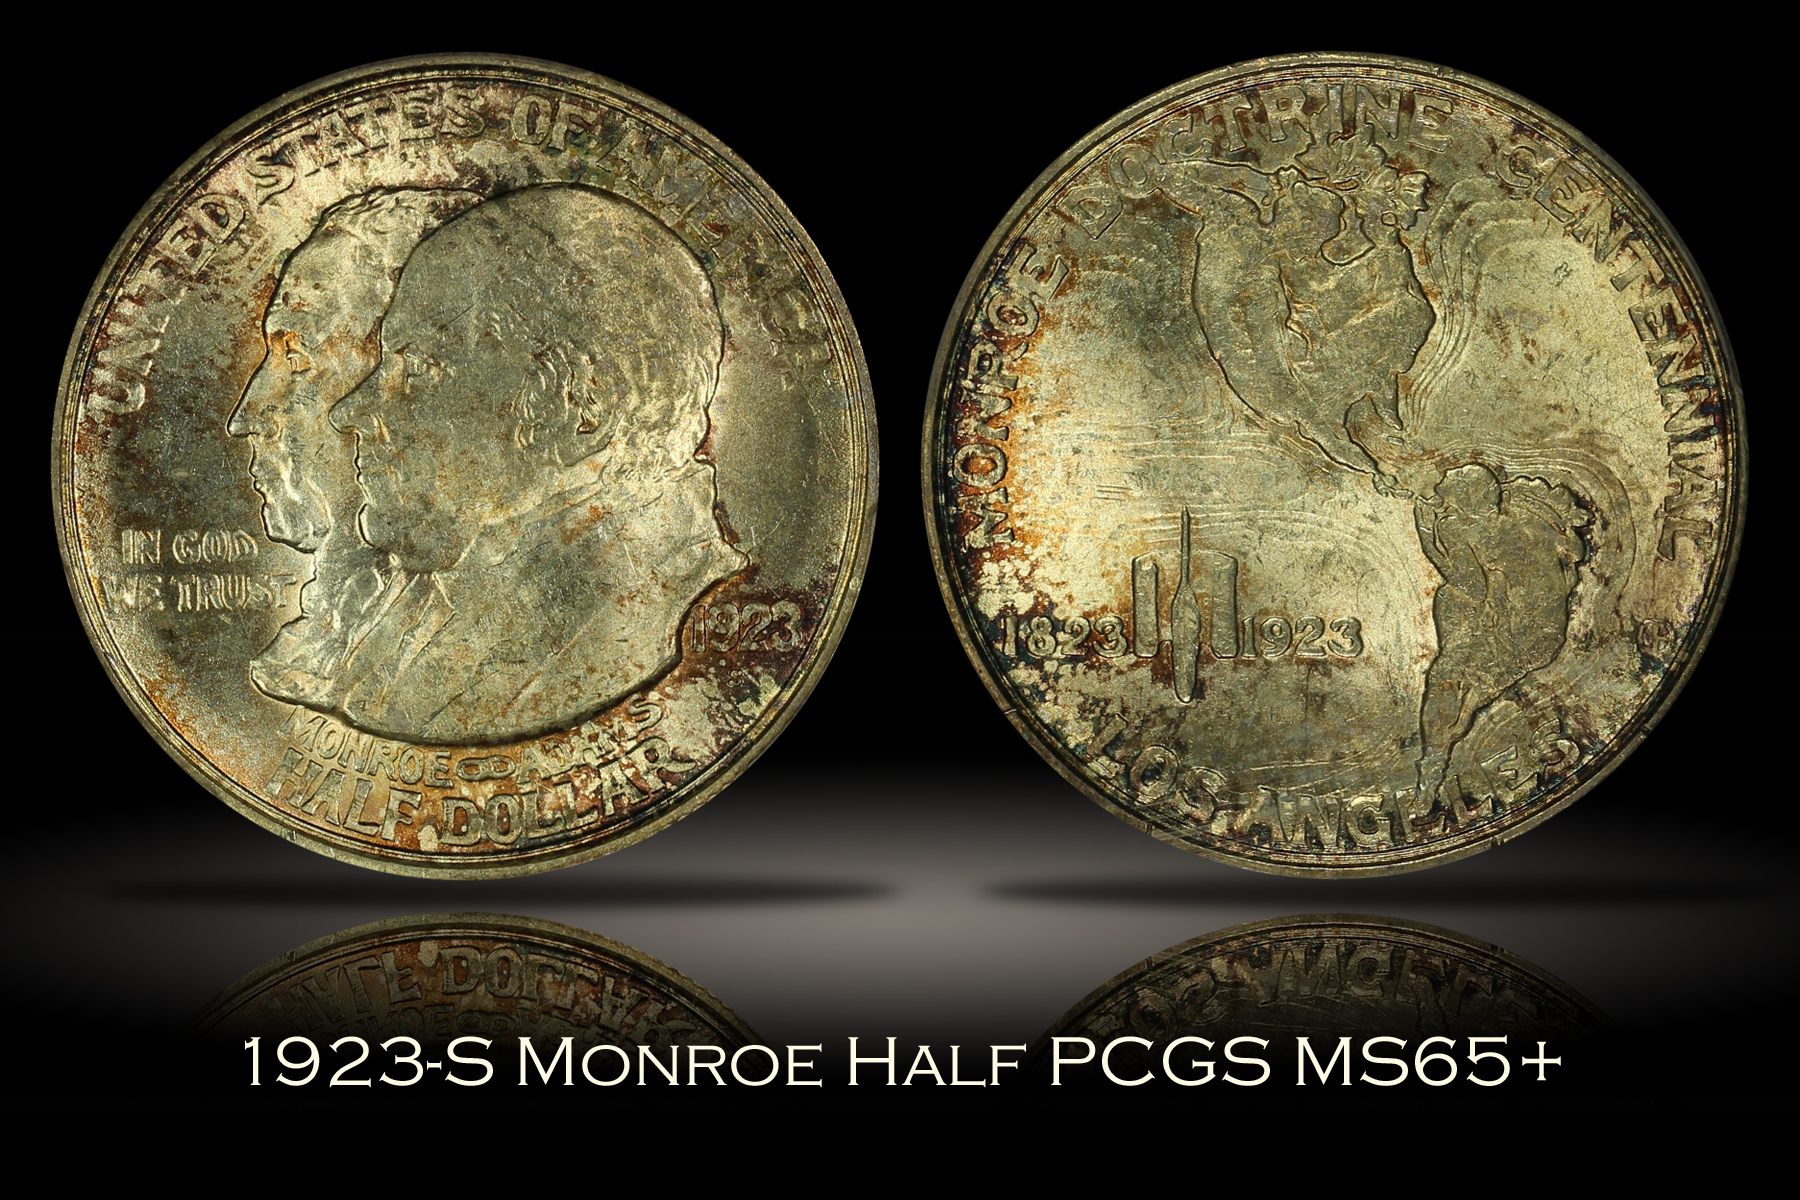 1923-S Monroe Doctrine Half PCGS MS65+